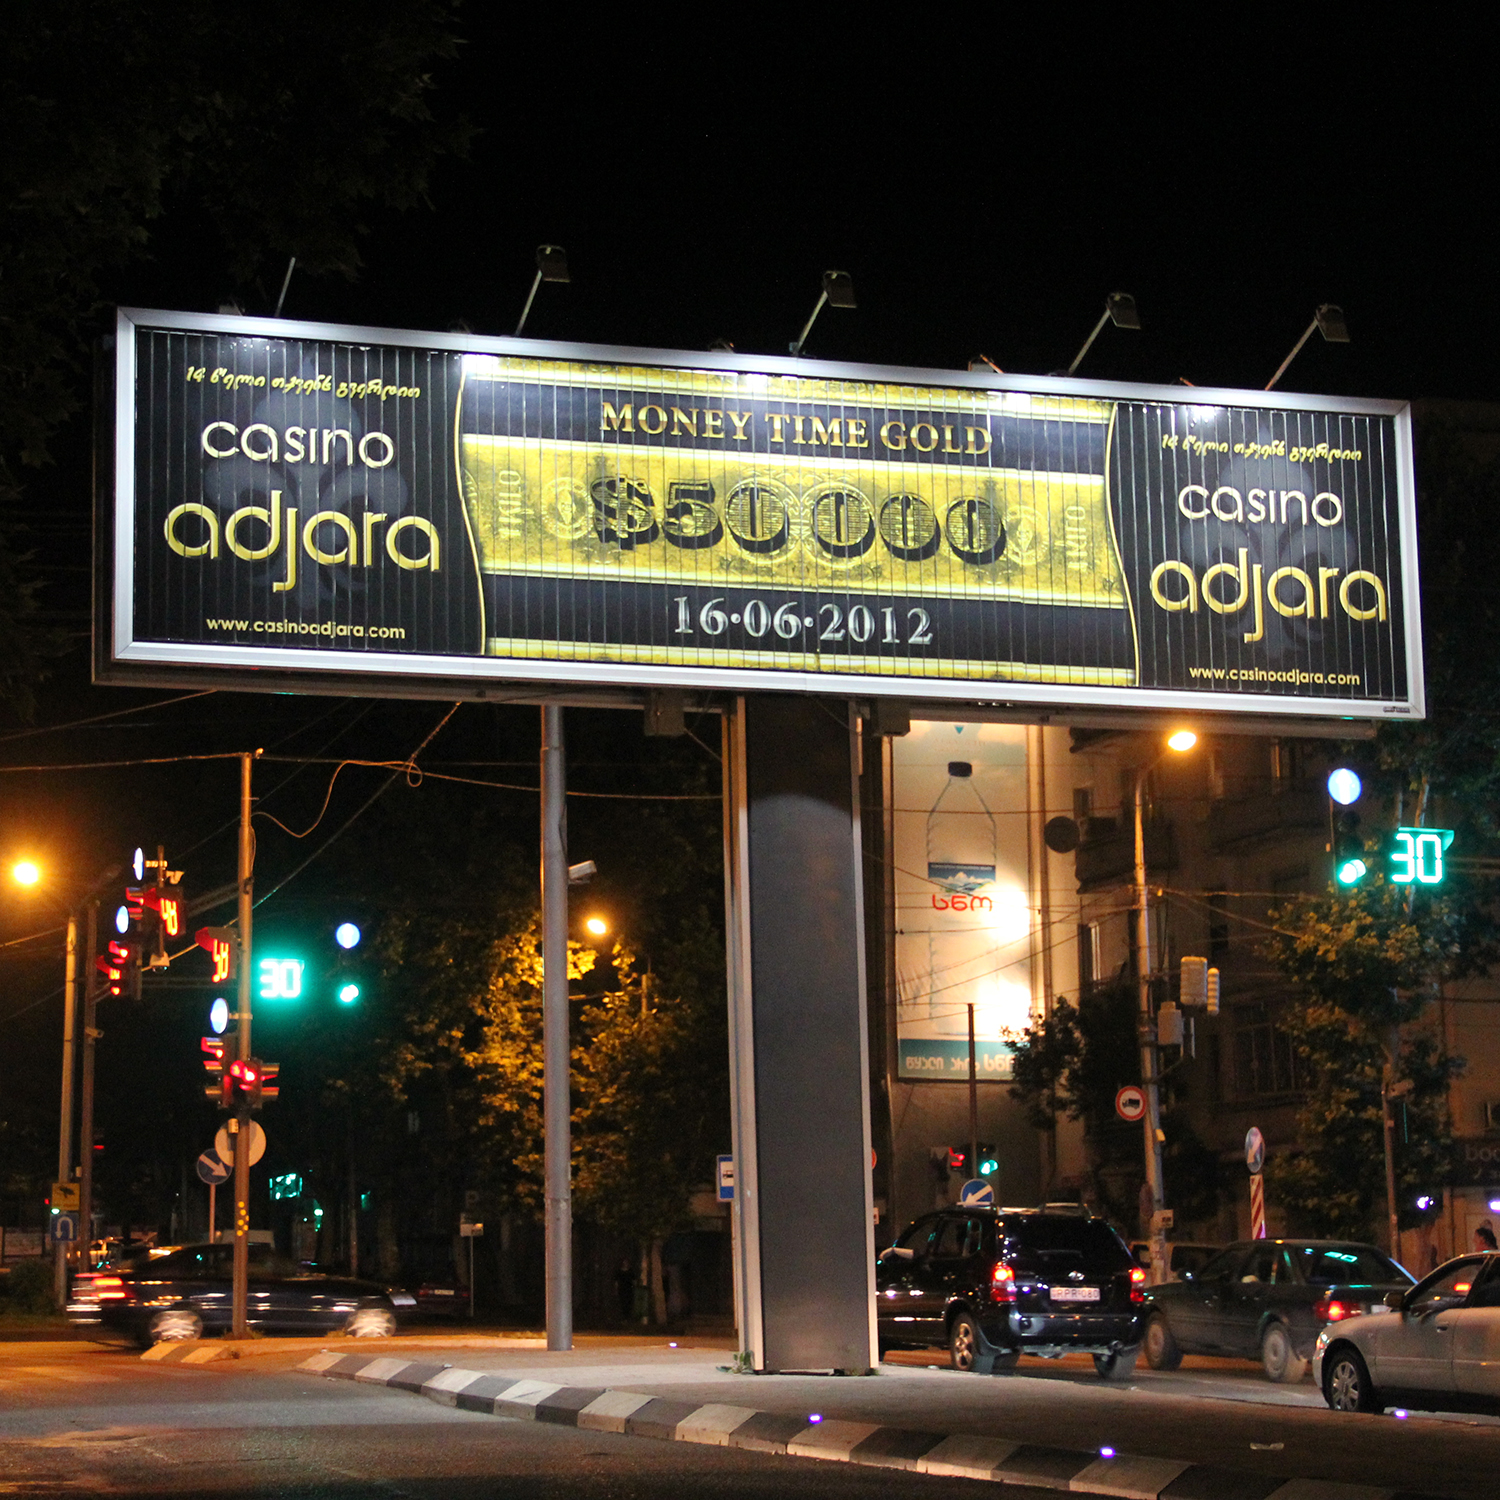 Adhesivo exterior publicitario Tri-vision Prisma Billboard